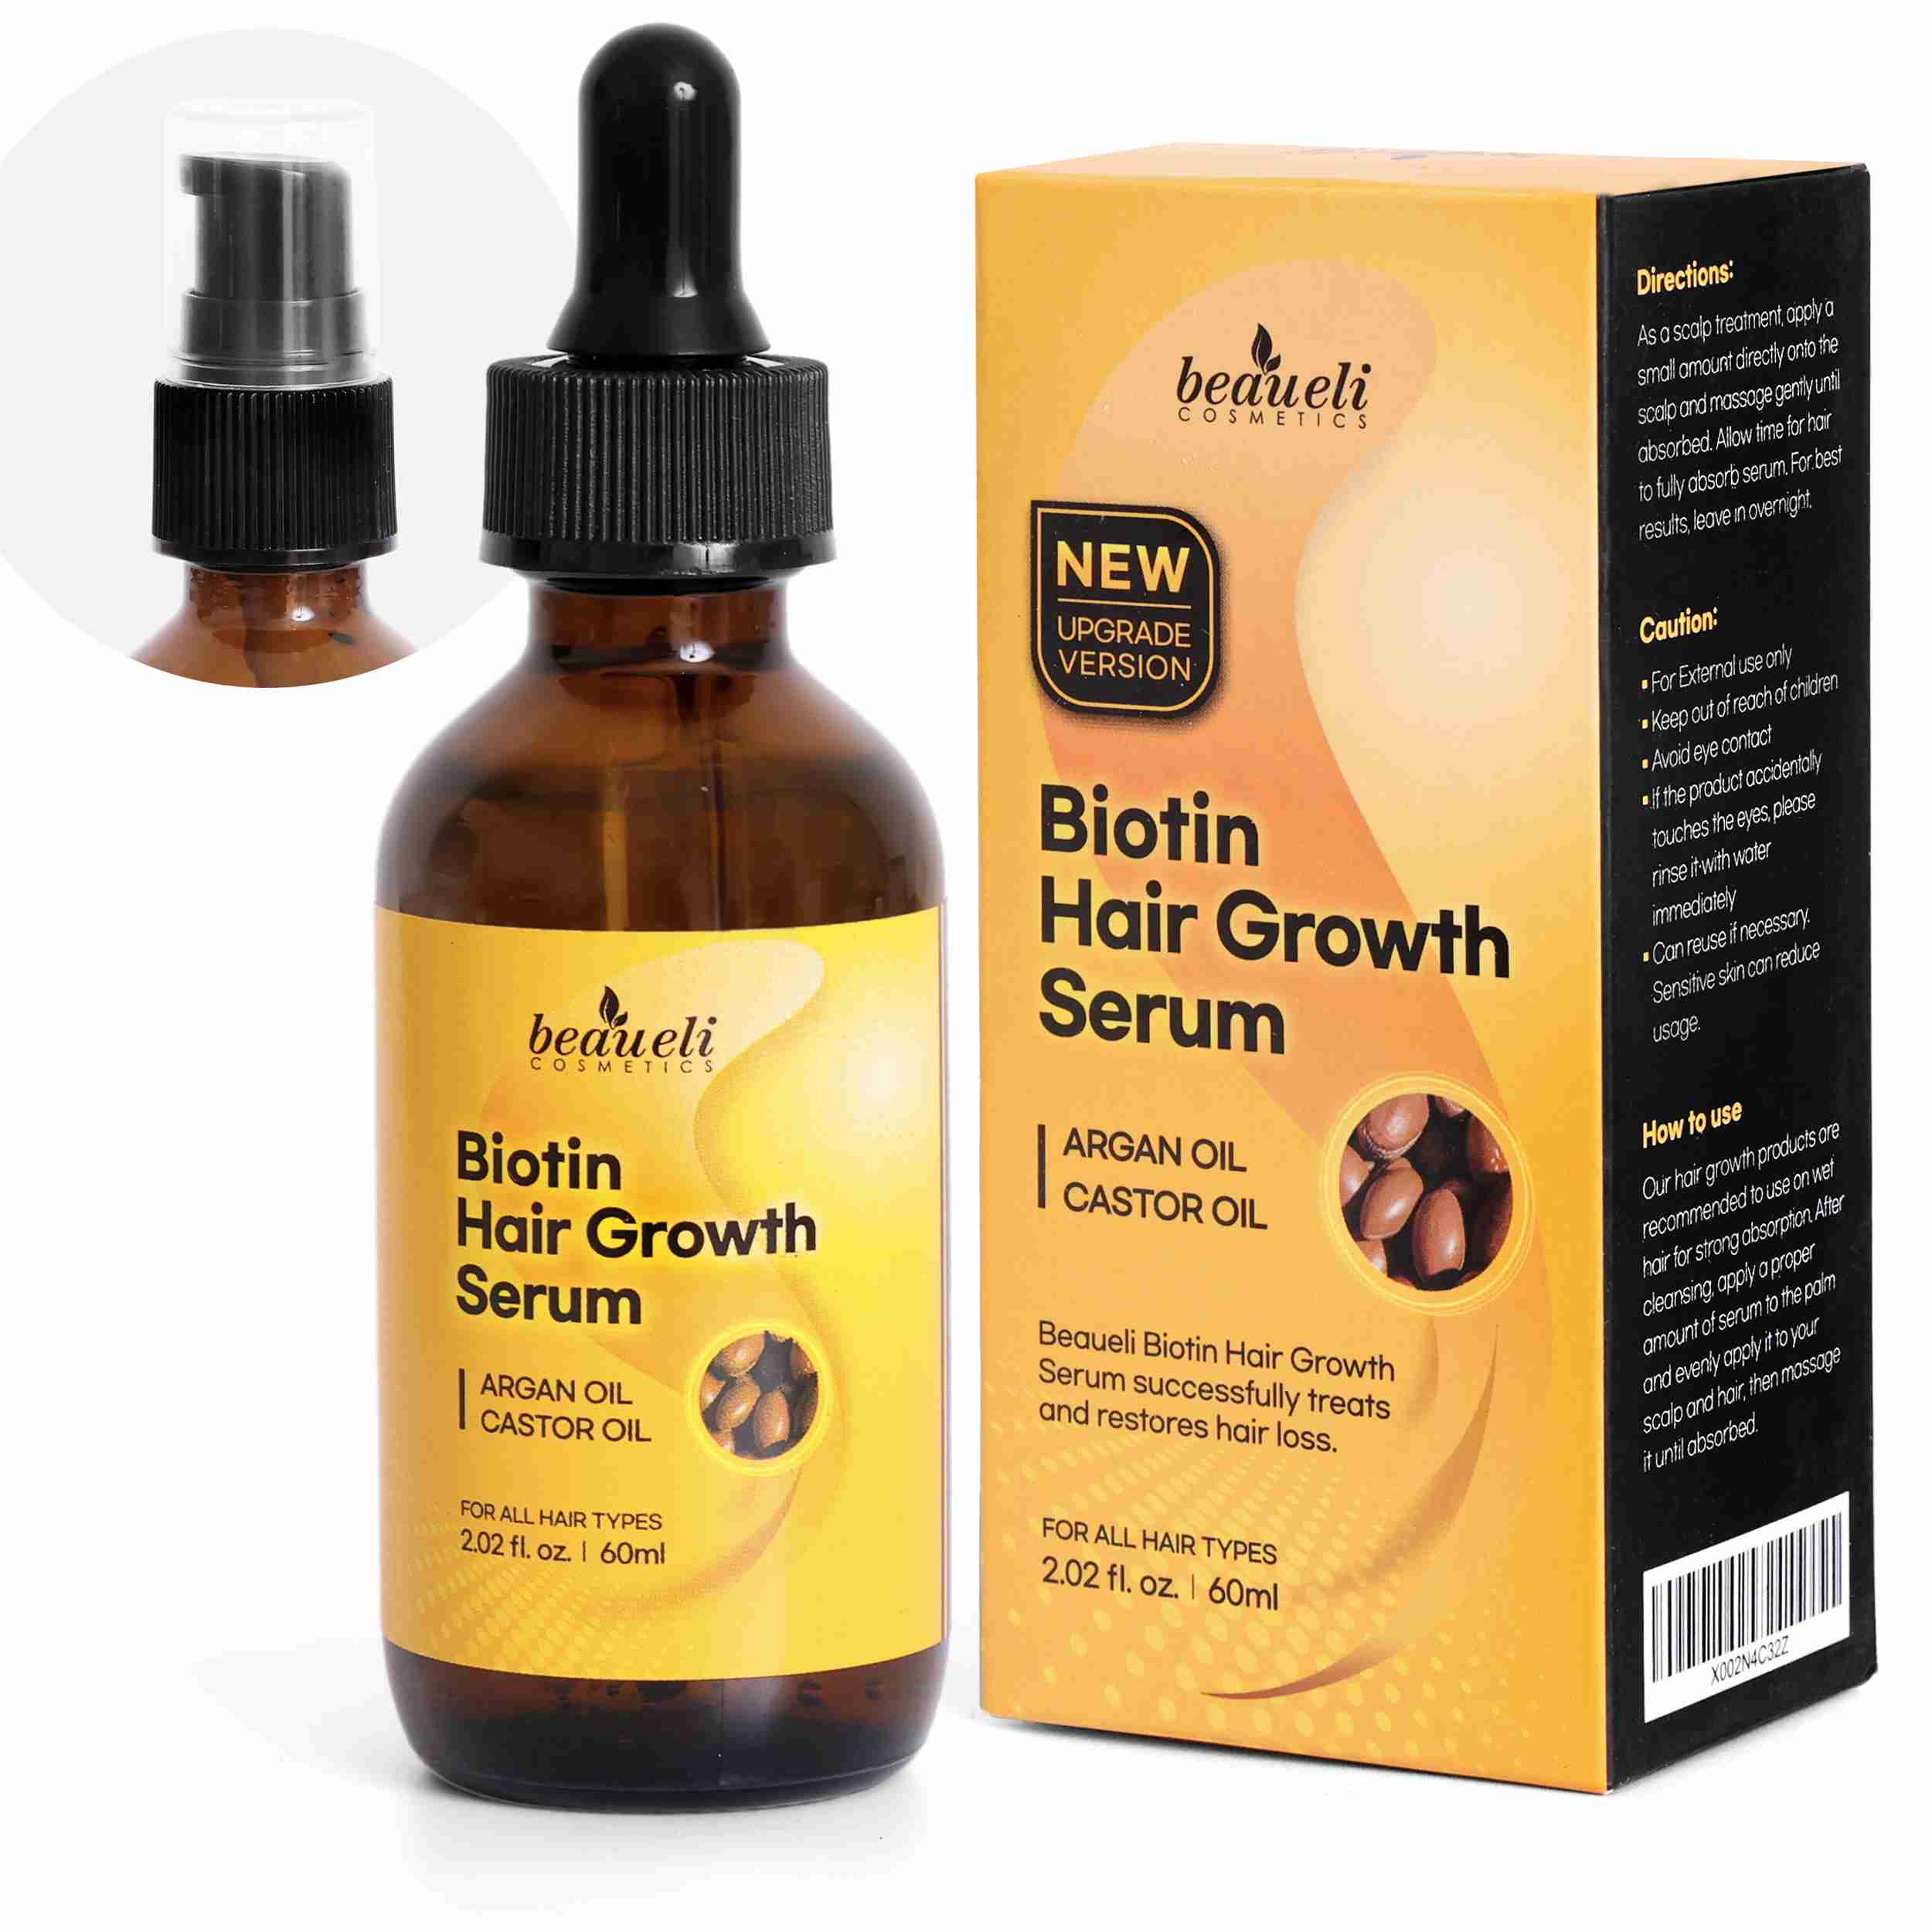 biotin-hair-growth-serum with cash back rebate